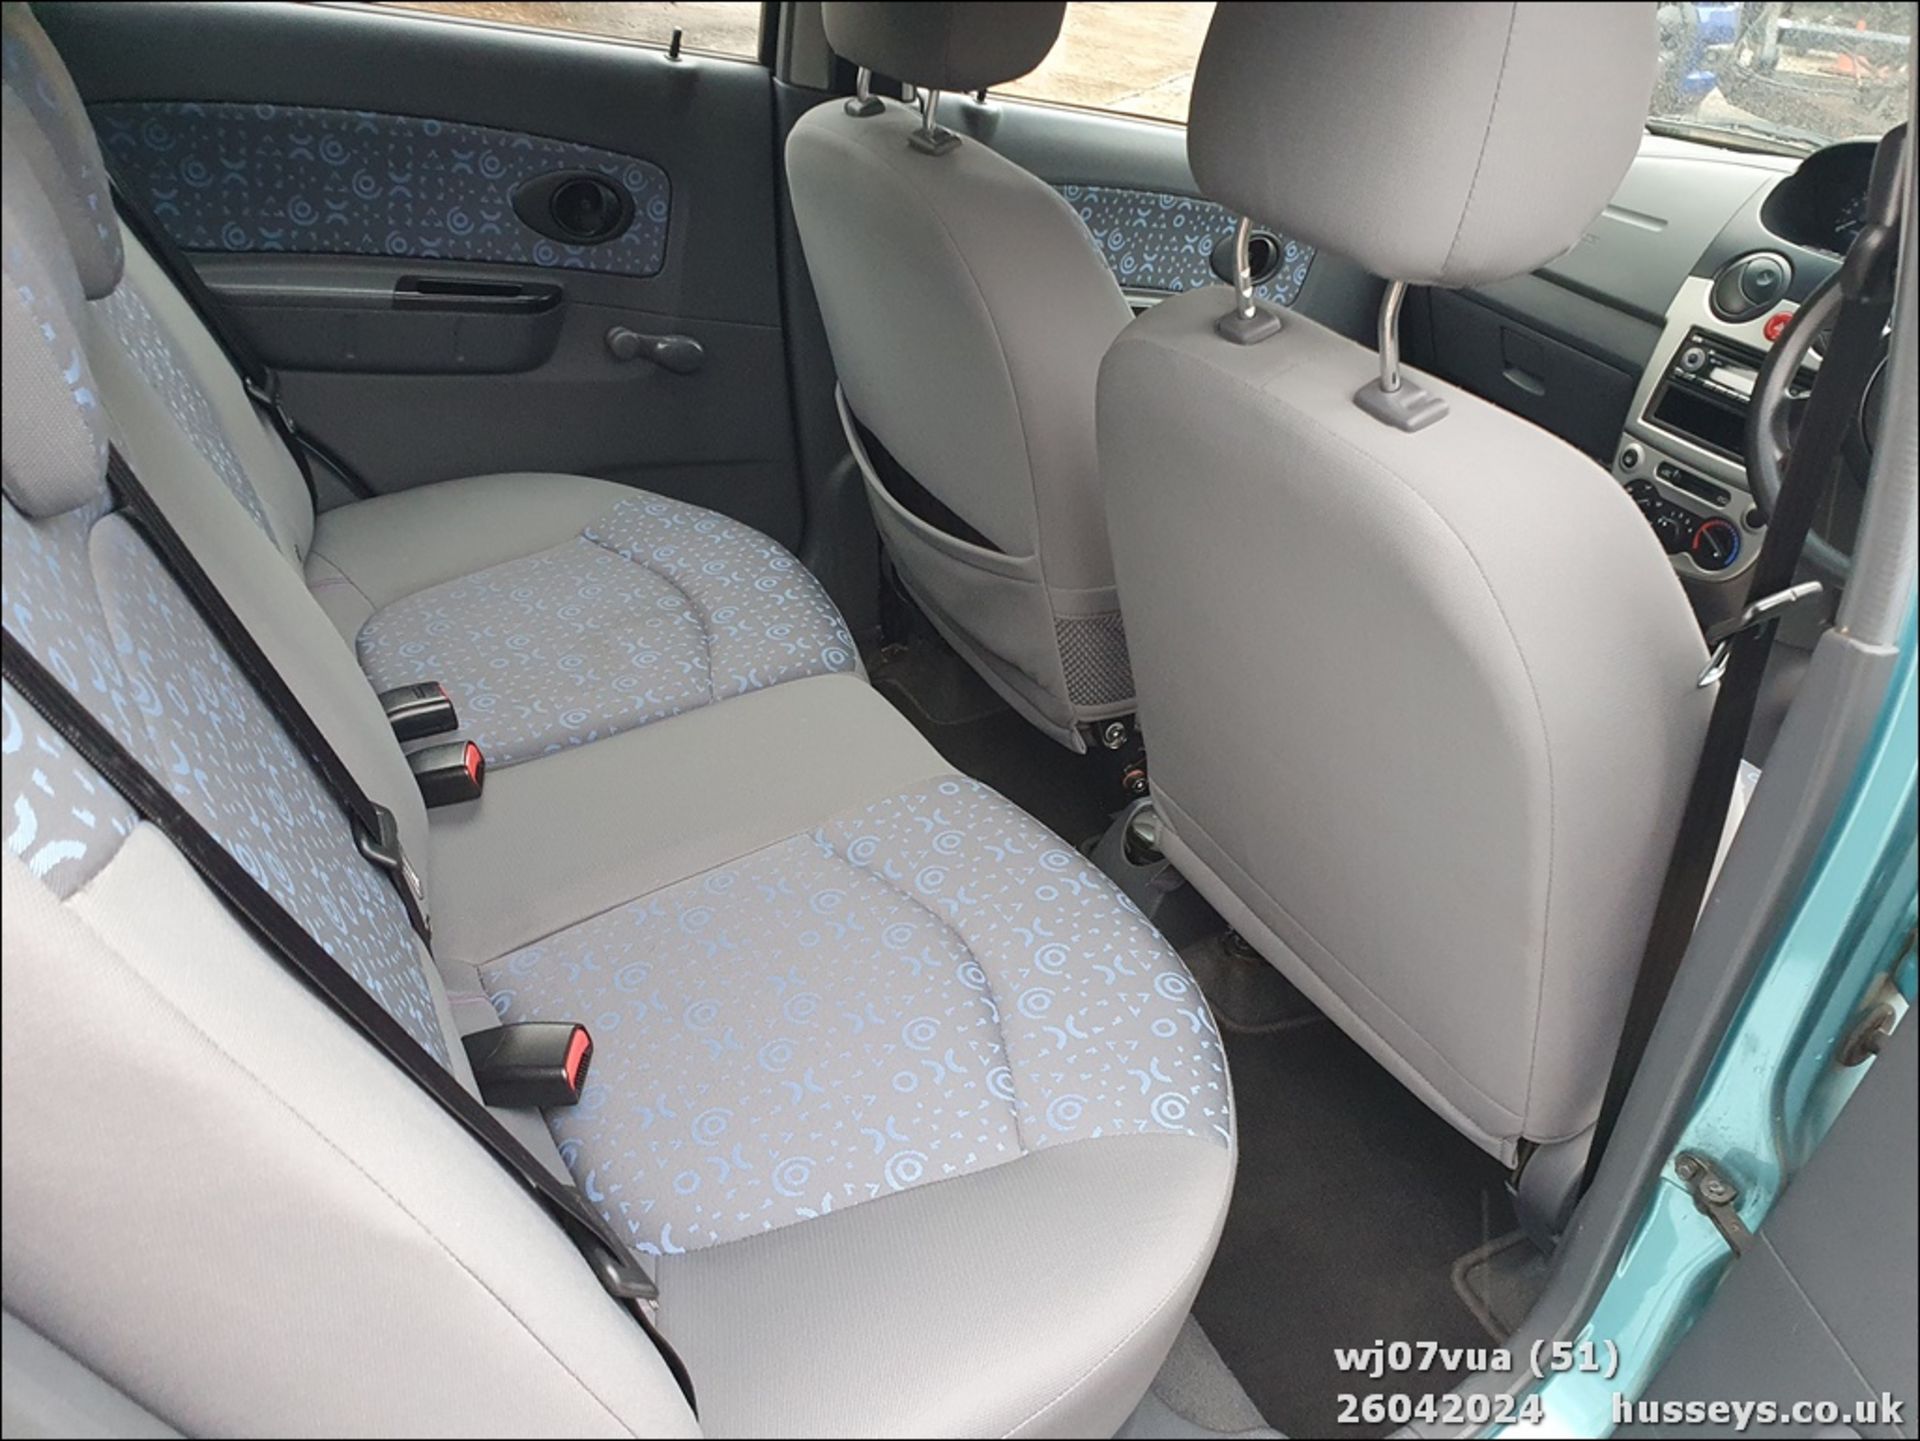 07/07 CHEVROLET MATIZ SE AUTO - 796cc 5dr Hatchback (Blue, 36k) - Image 52 of 56